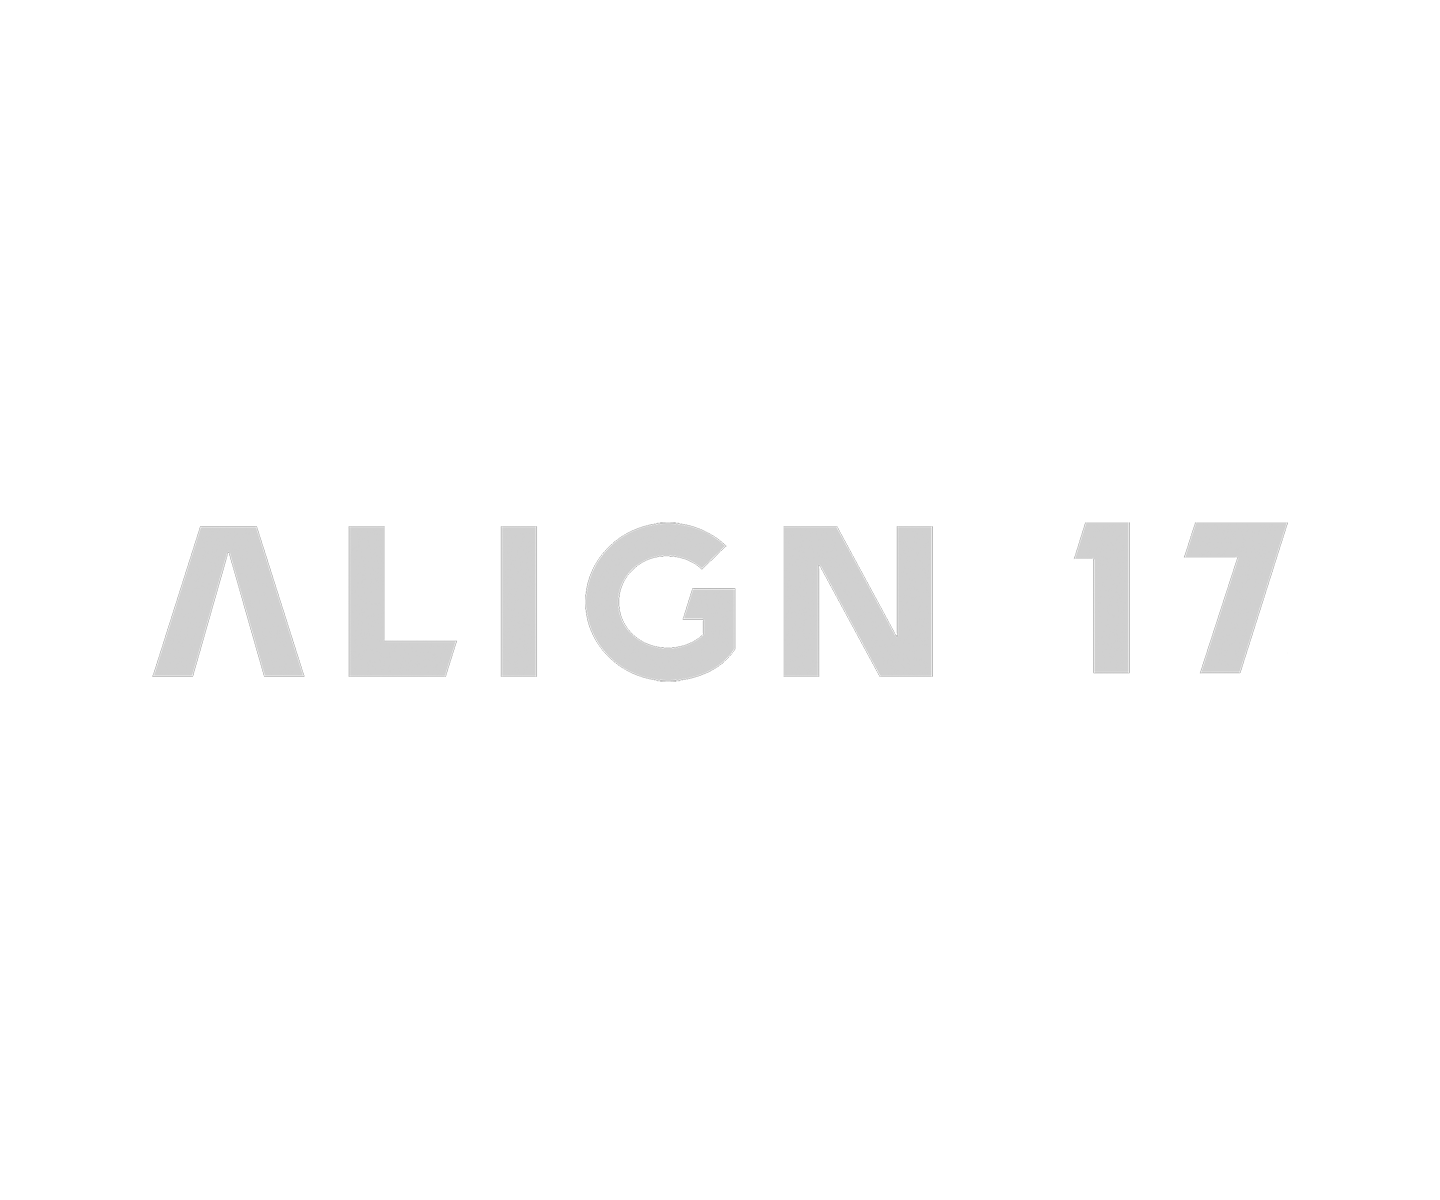 Align17